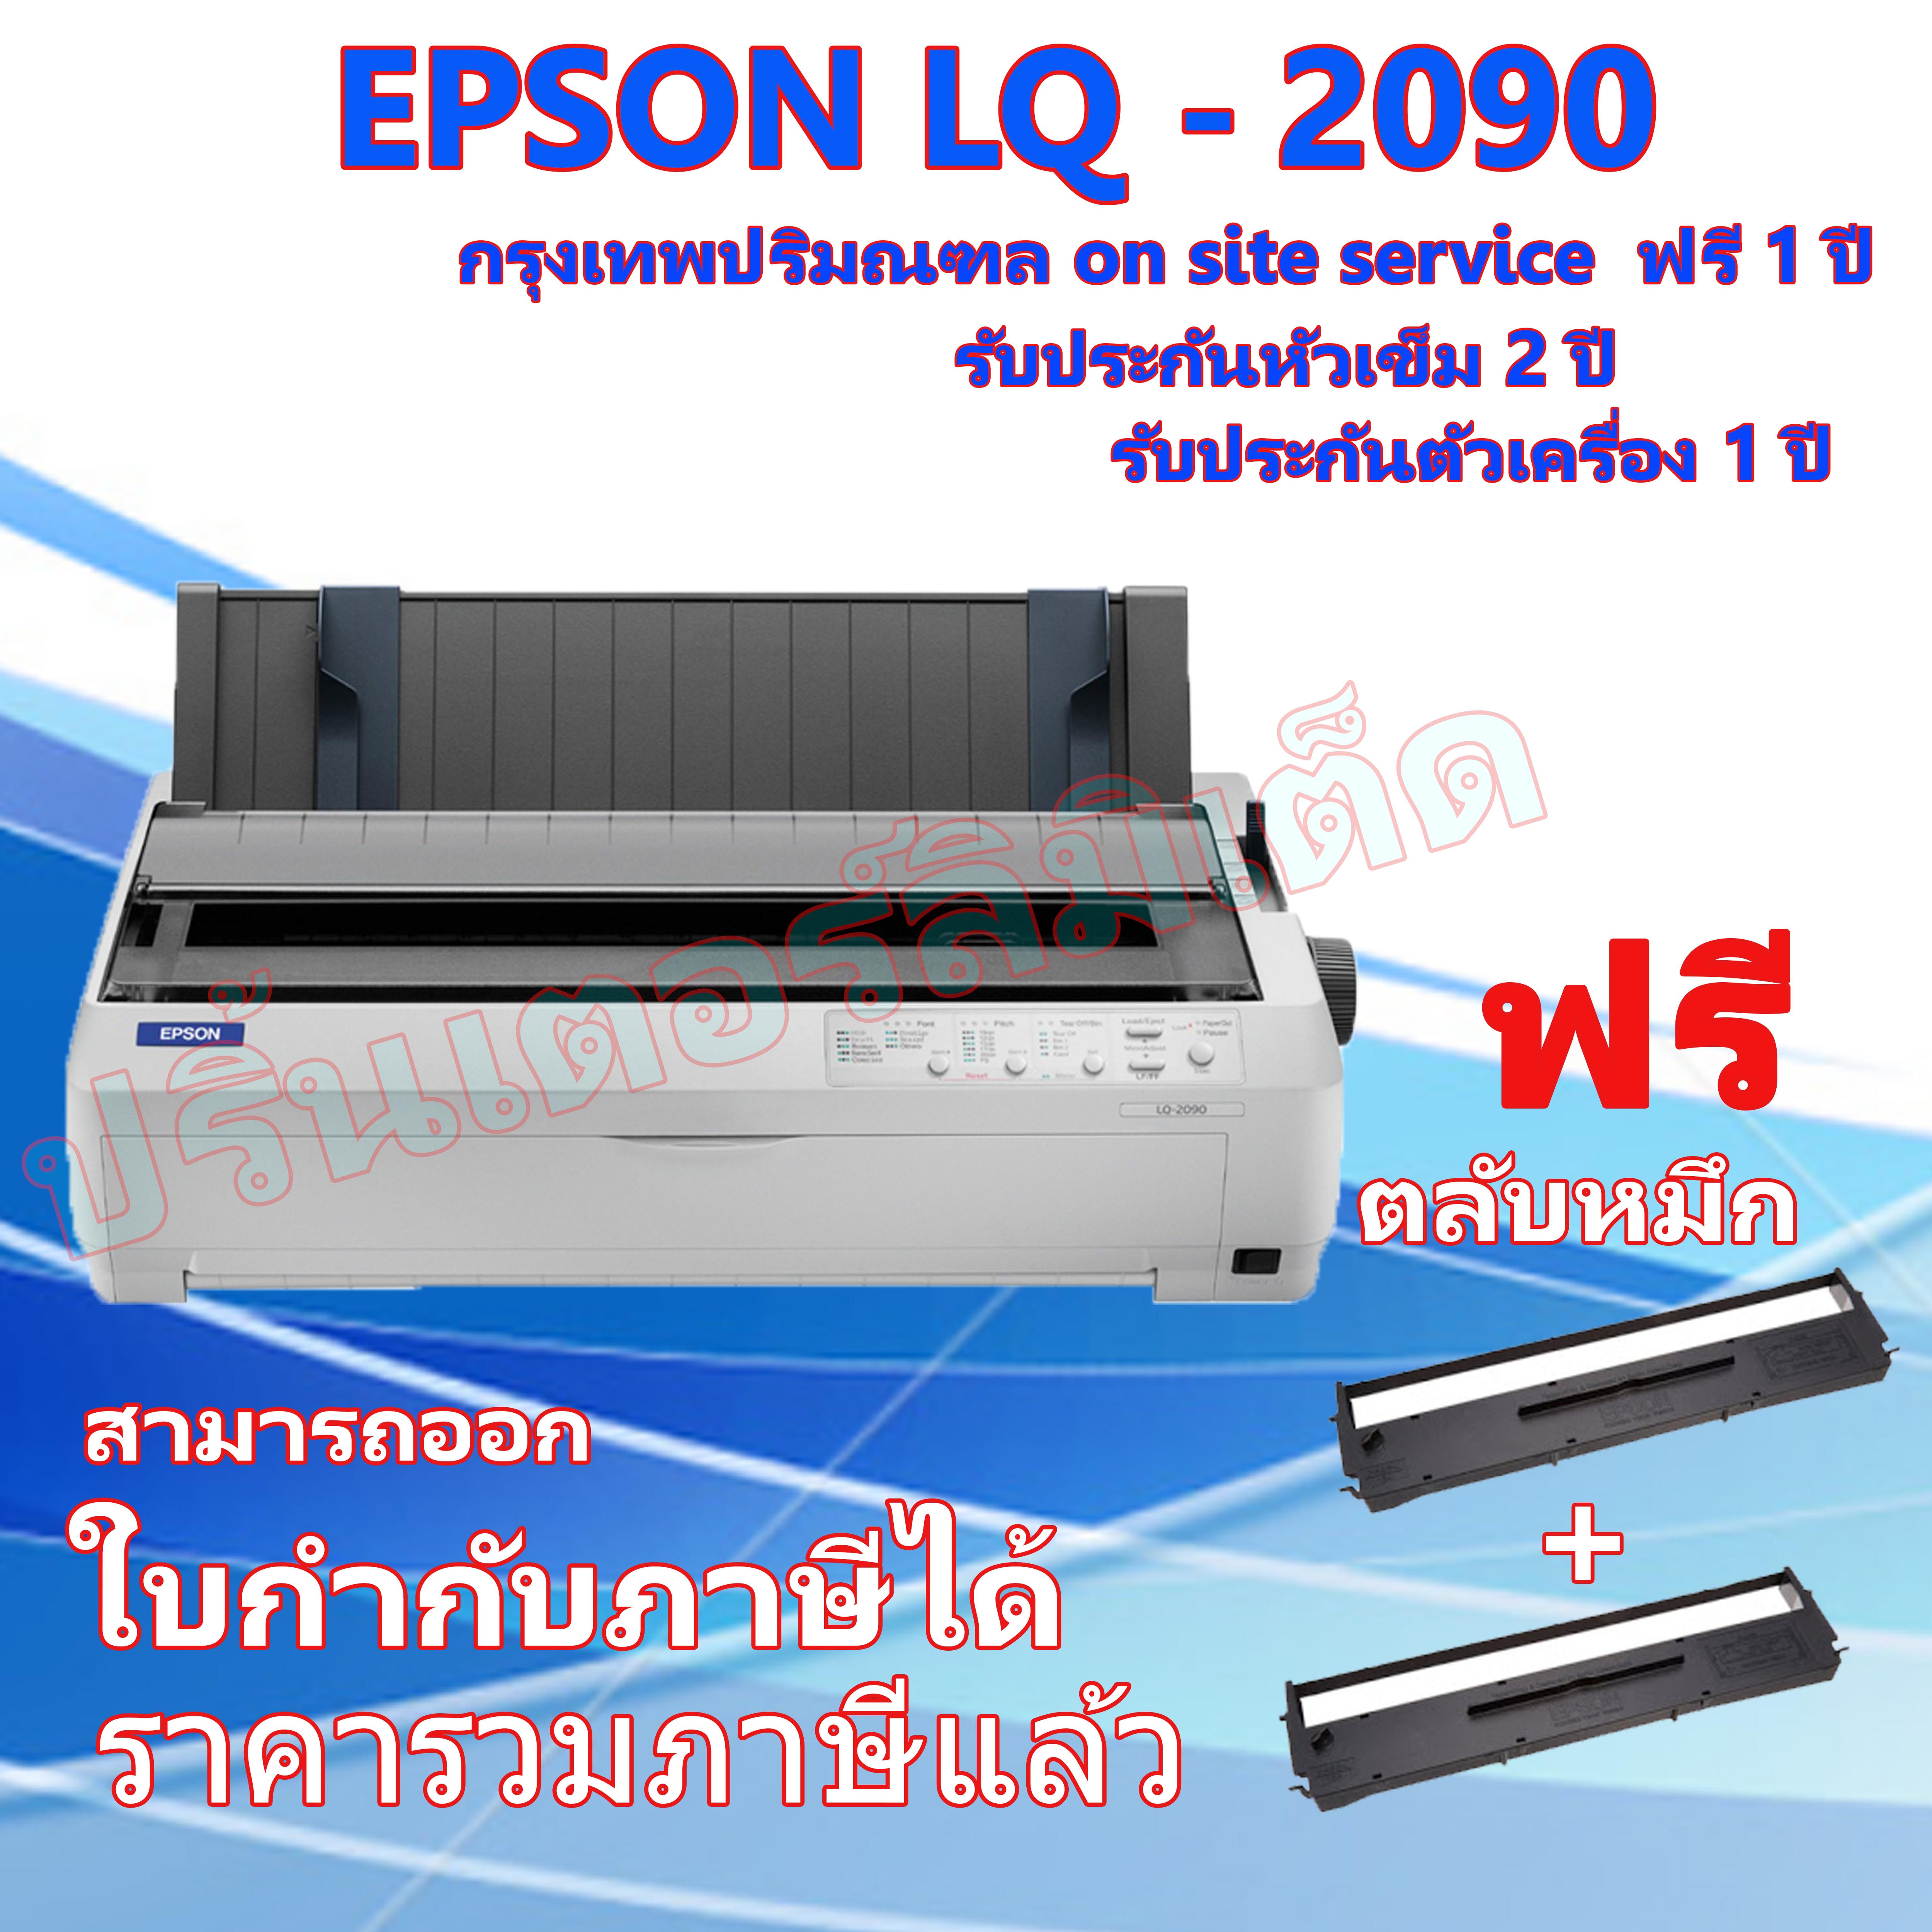 Epson Dot Matrix Printer Lq 2090 รับประกันตัวเครื่อง 1ปี หัวเข็ม 2ปี On Site Service ฟรี 1ปี 7926